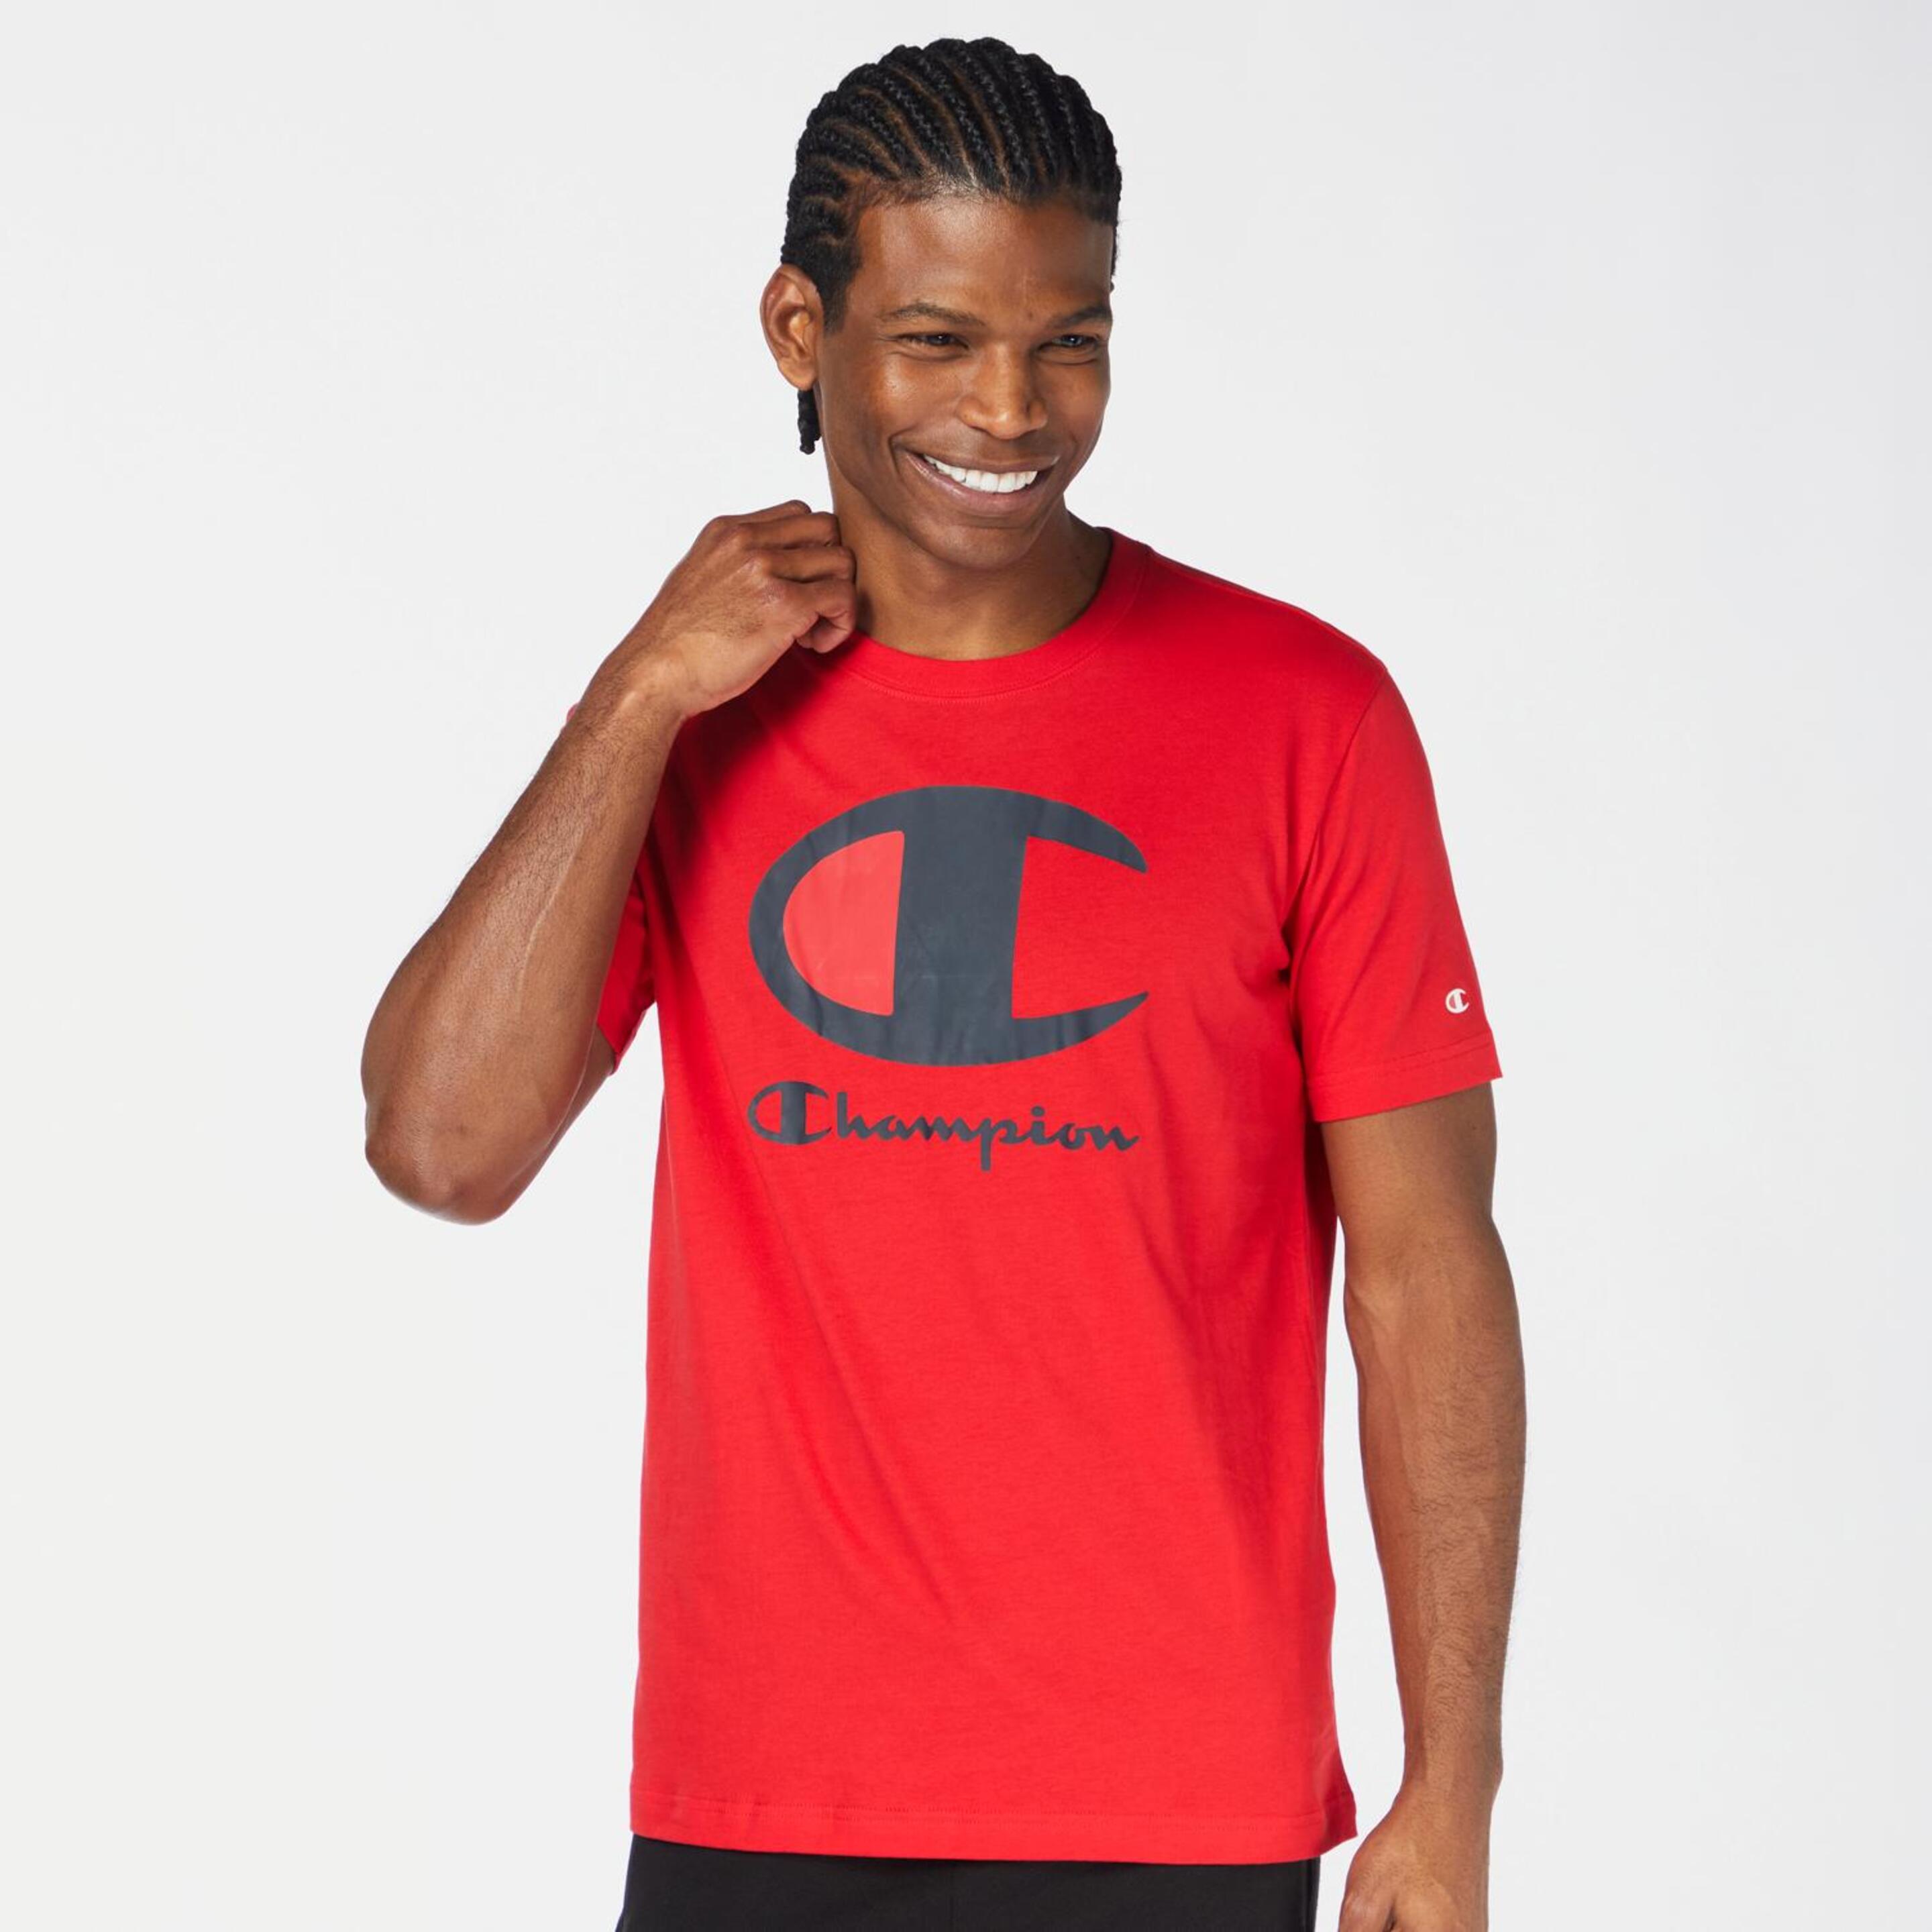 Camiseta Champion - rojo - Camiseta Hombre